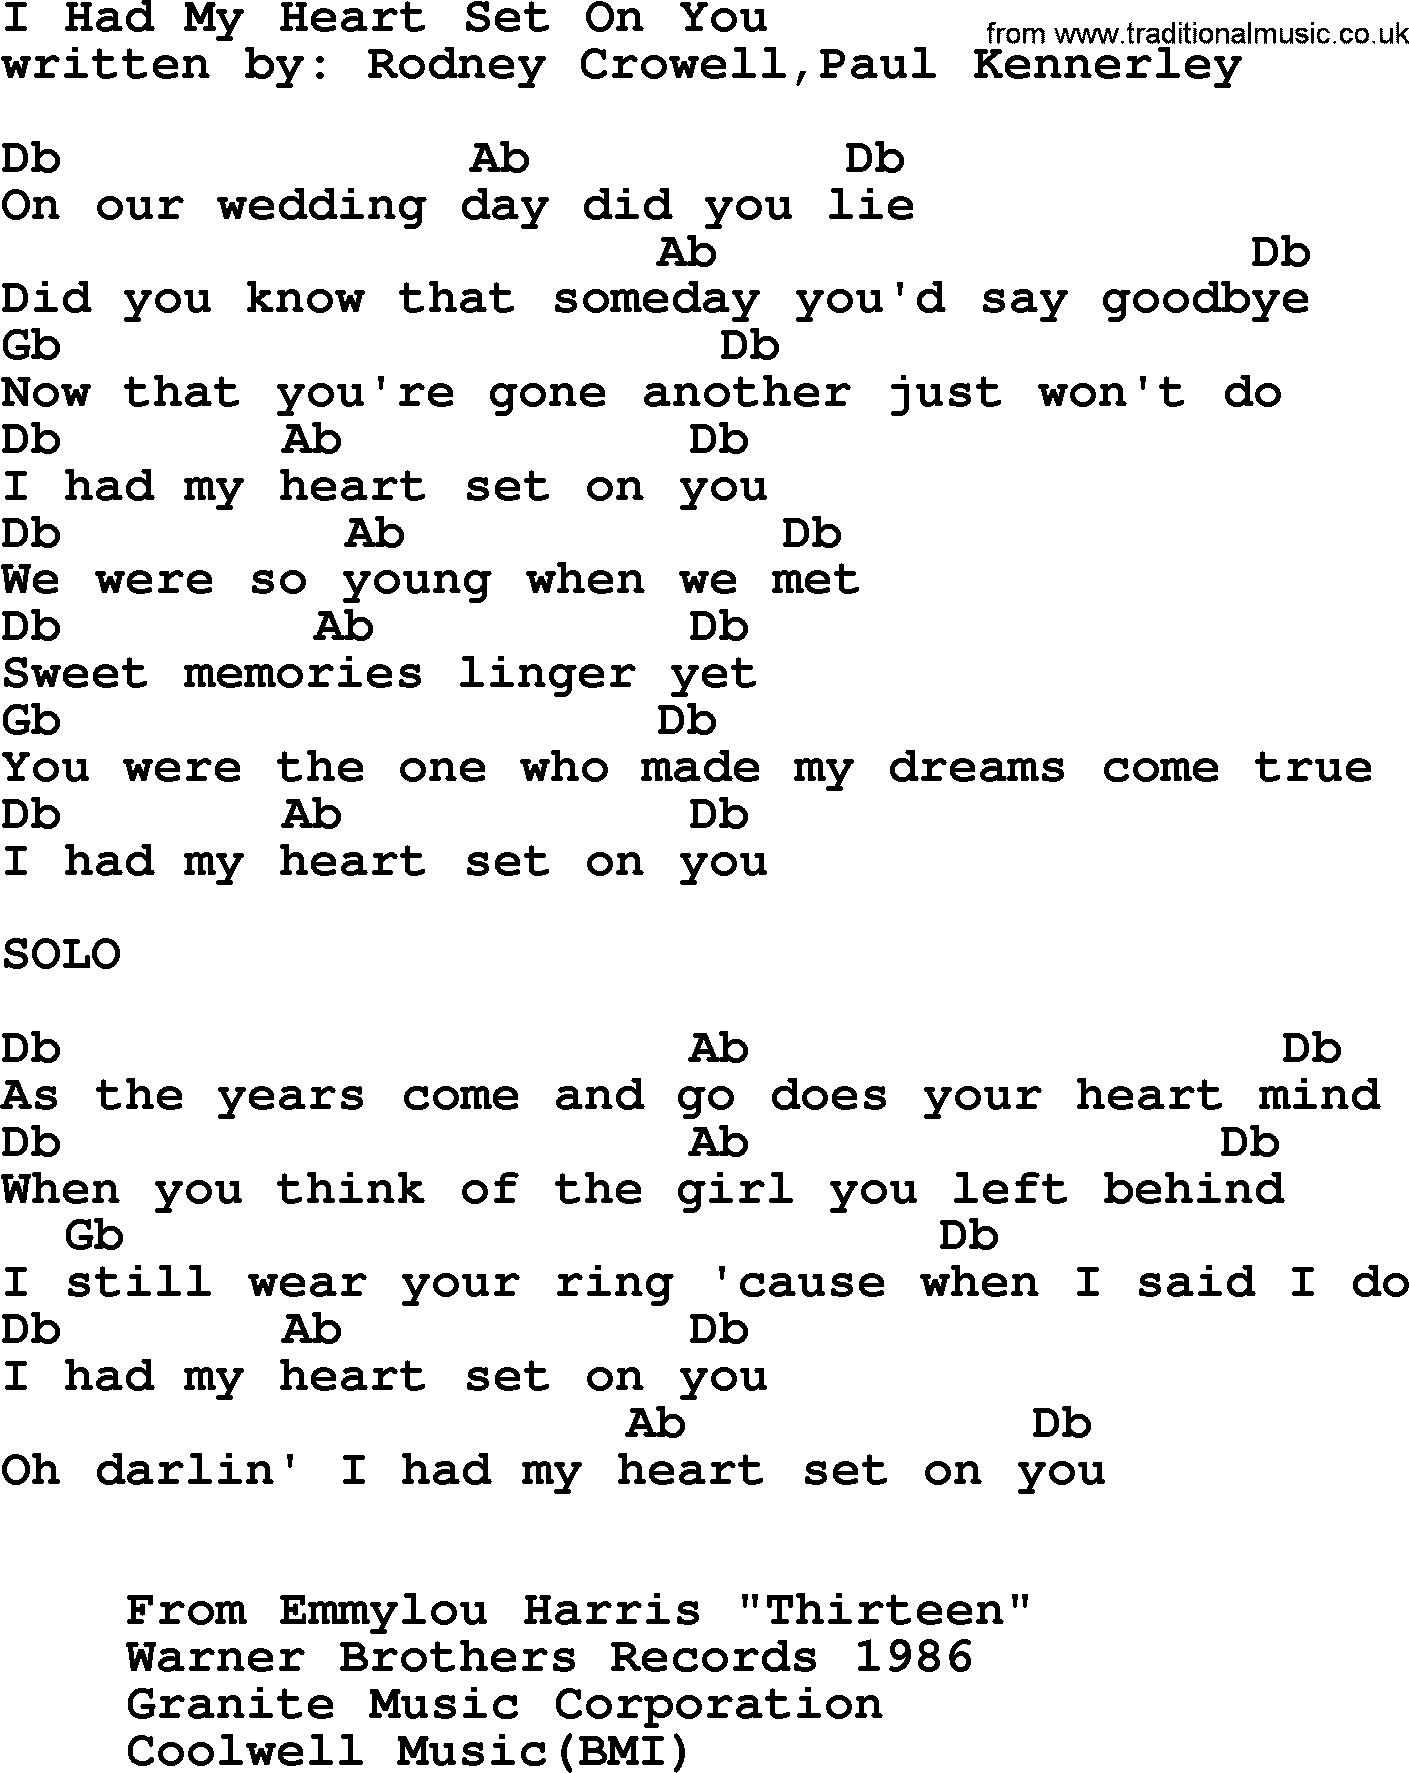 Emmylou Harris song: I Had My Heart Set On You lyrics and chords